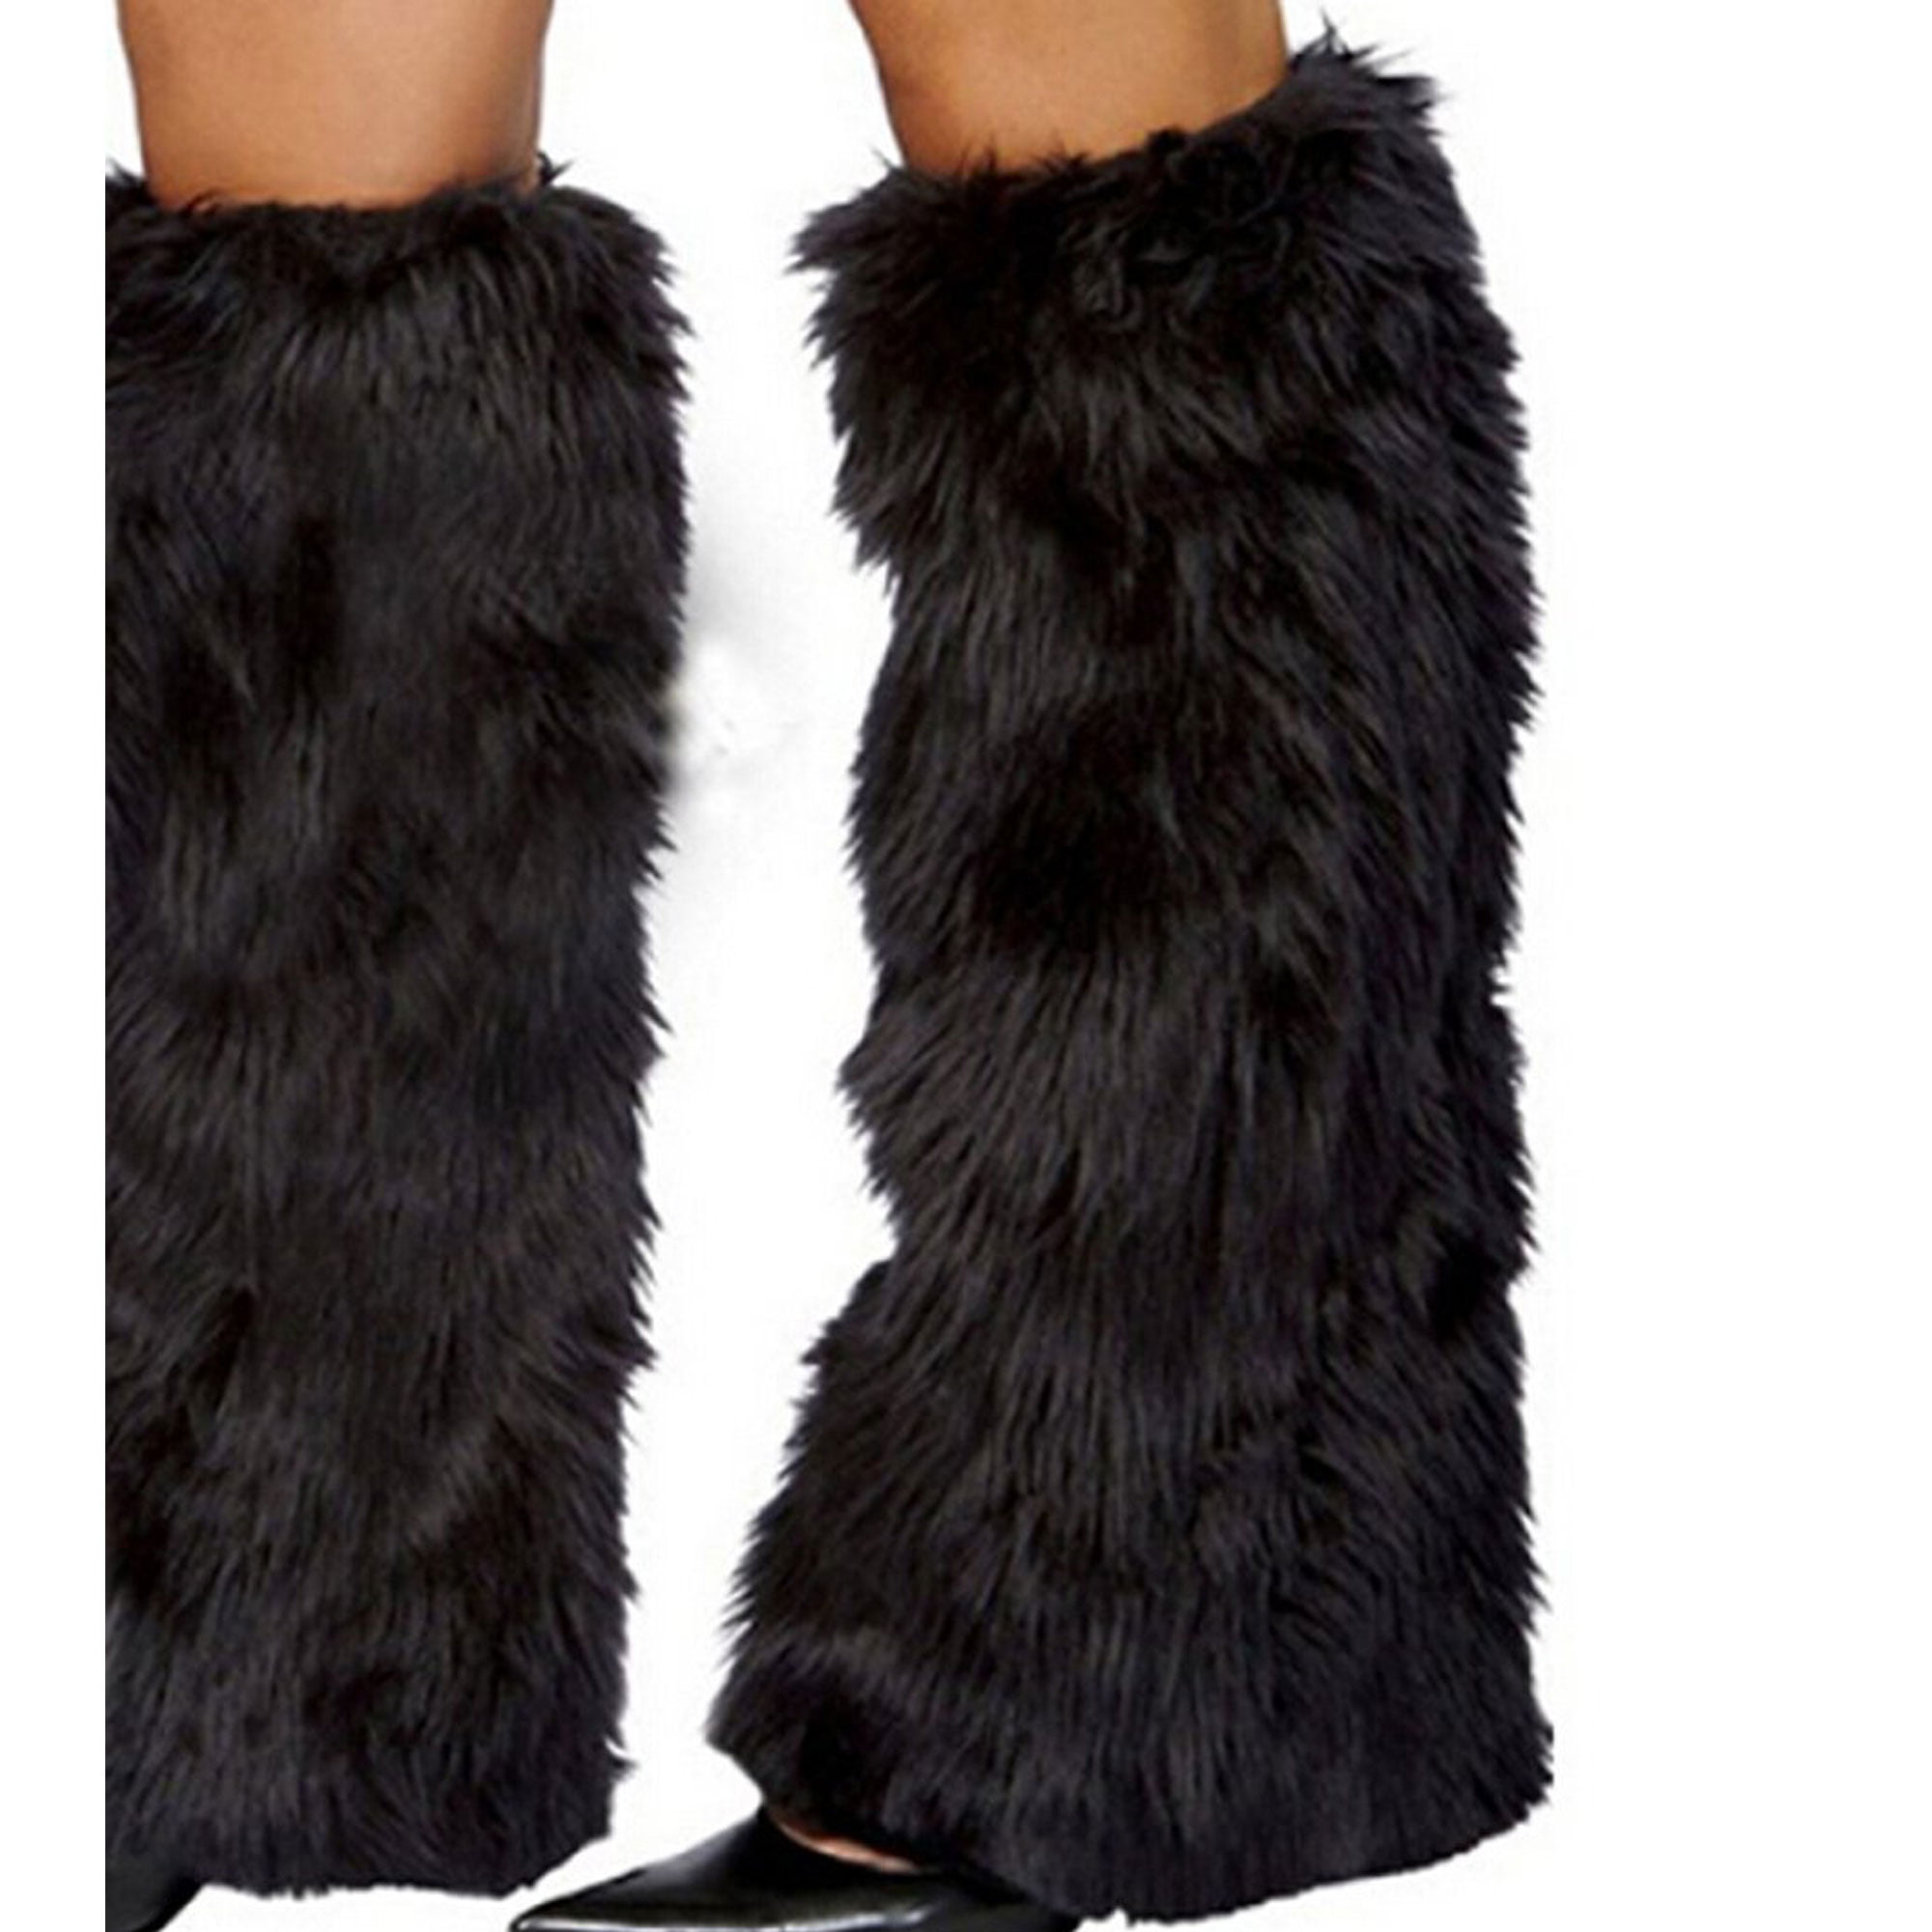 TAORE Womens Winter Faux Fur Leg Warmers Warm Fuzzy Boots Cuffs Cover